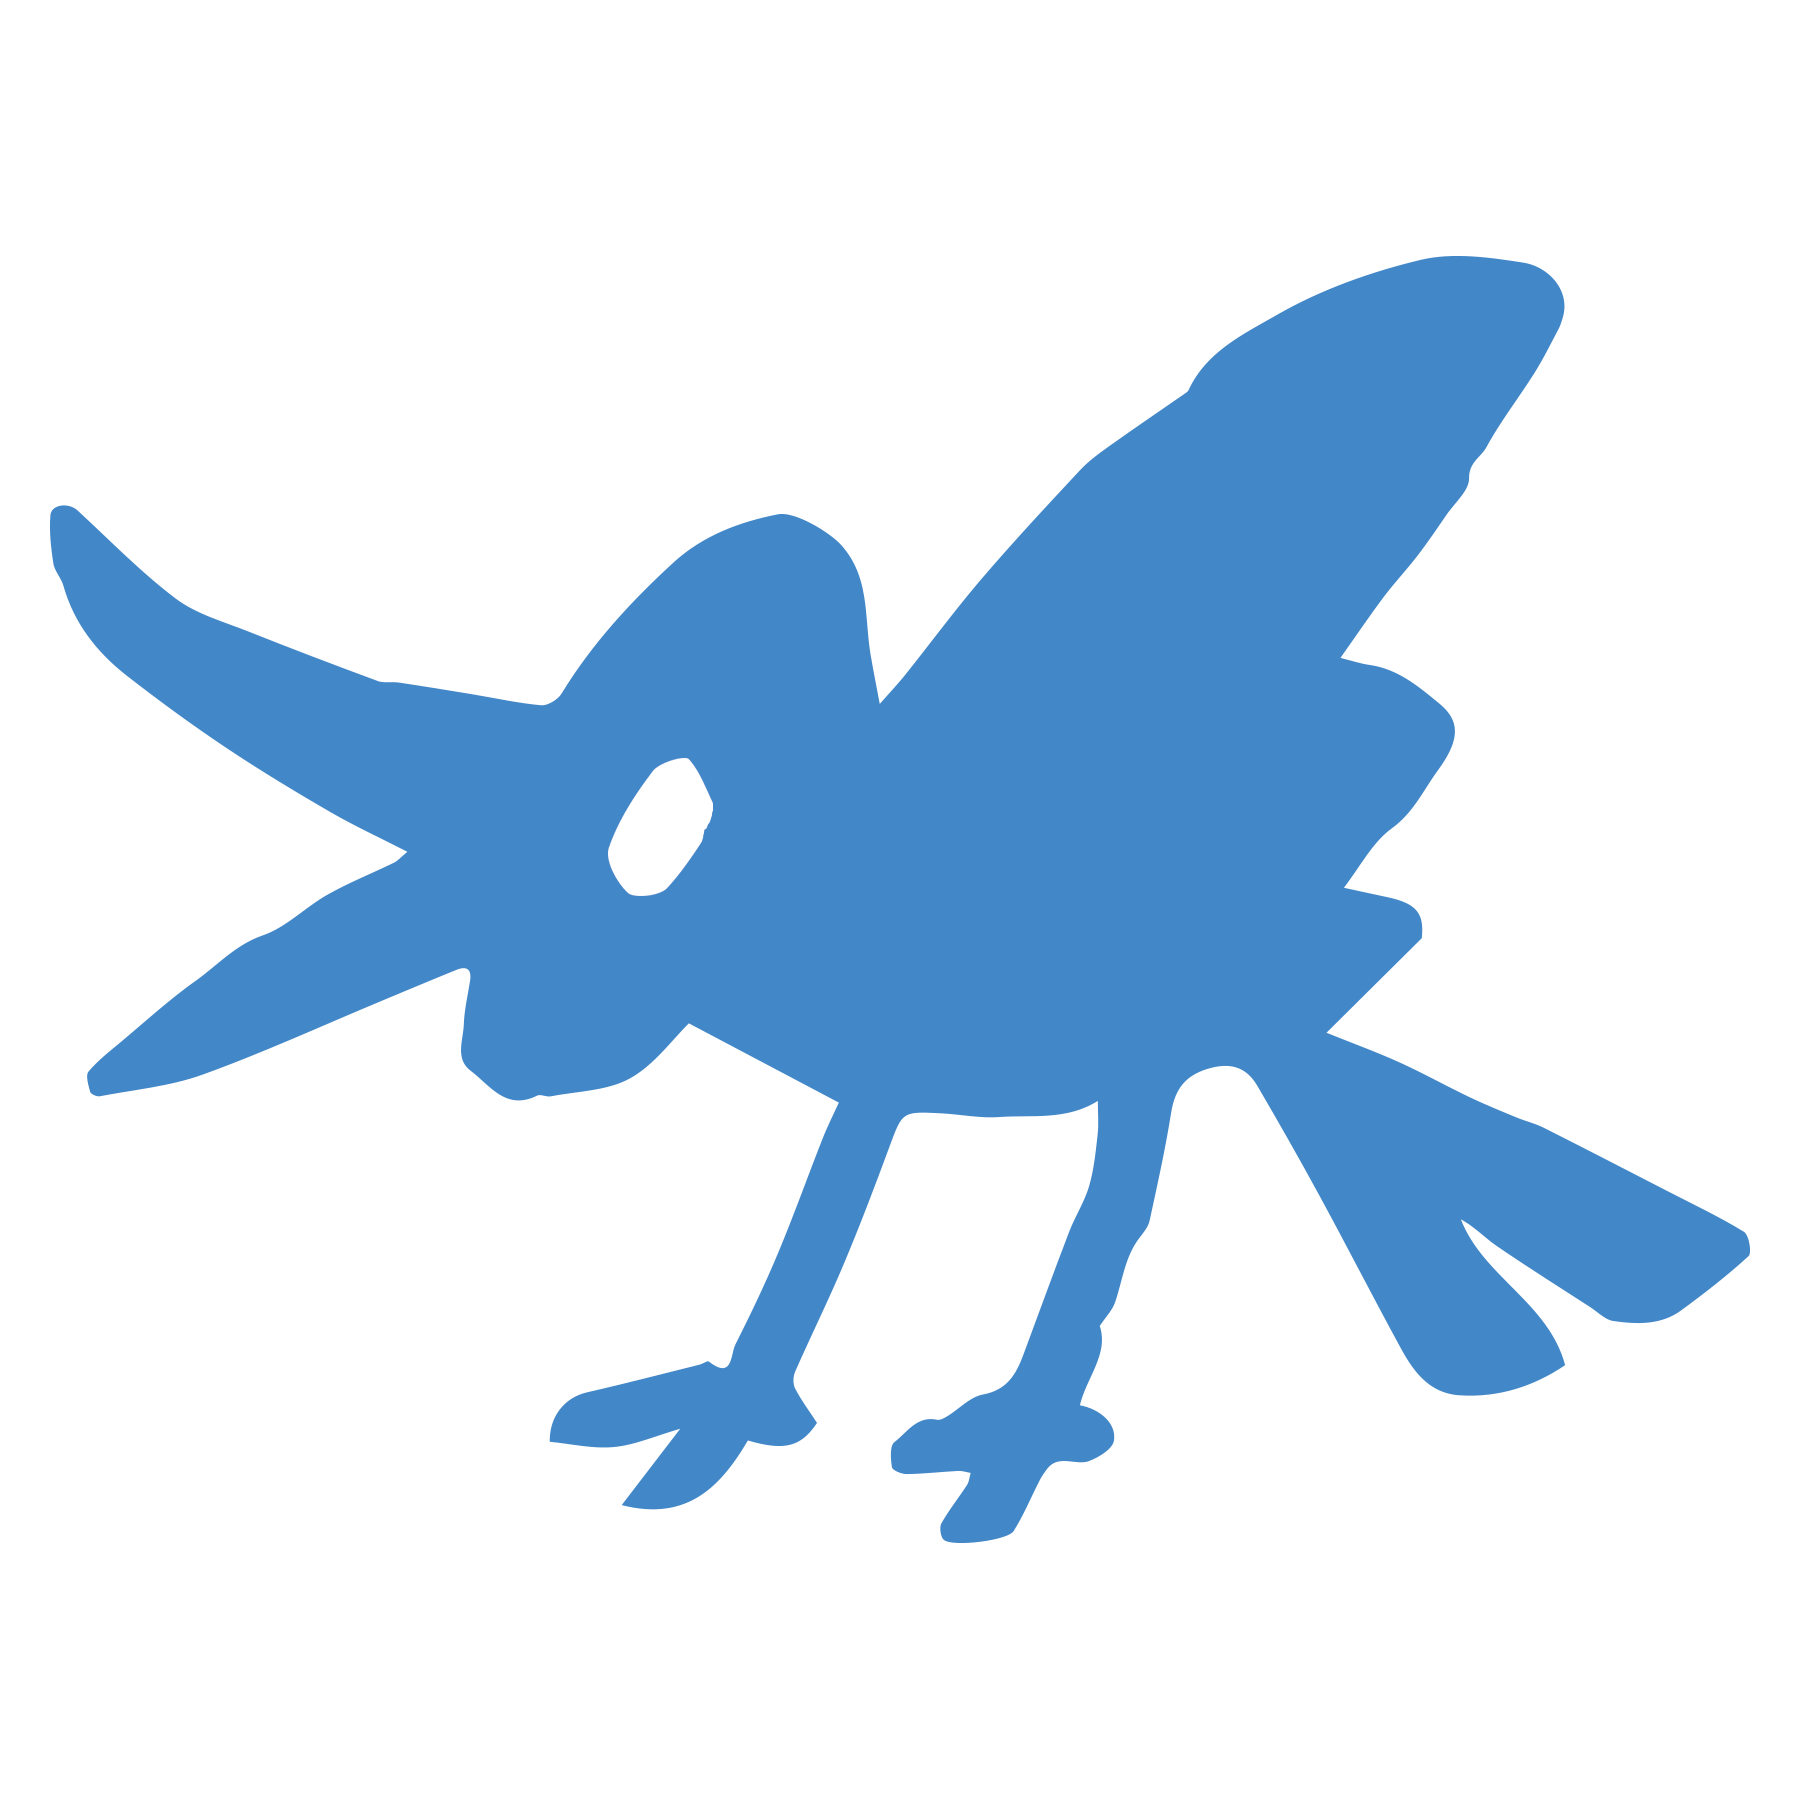 Twitterっぽい青い鳥のイラスト ゆるくてかわいい無料イラスト素材屋 ぴよたそ